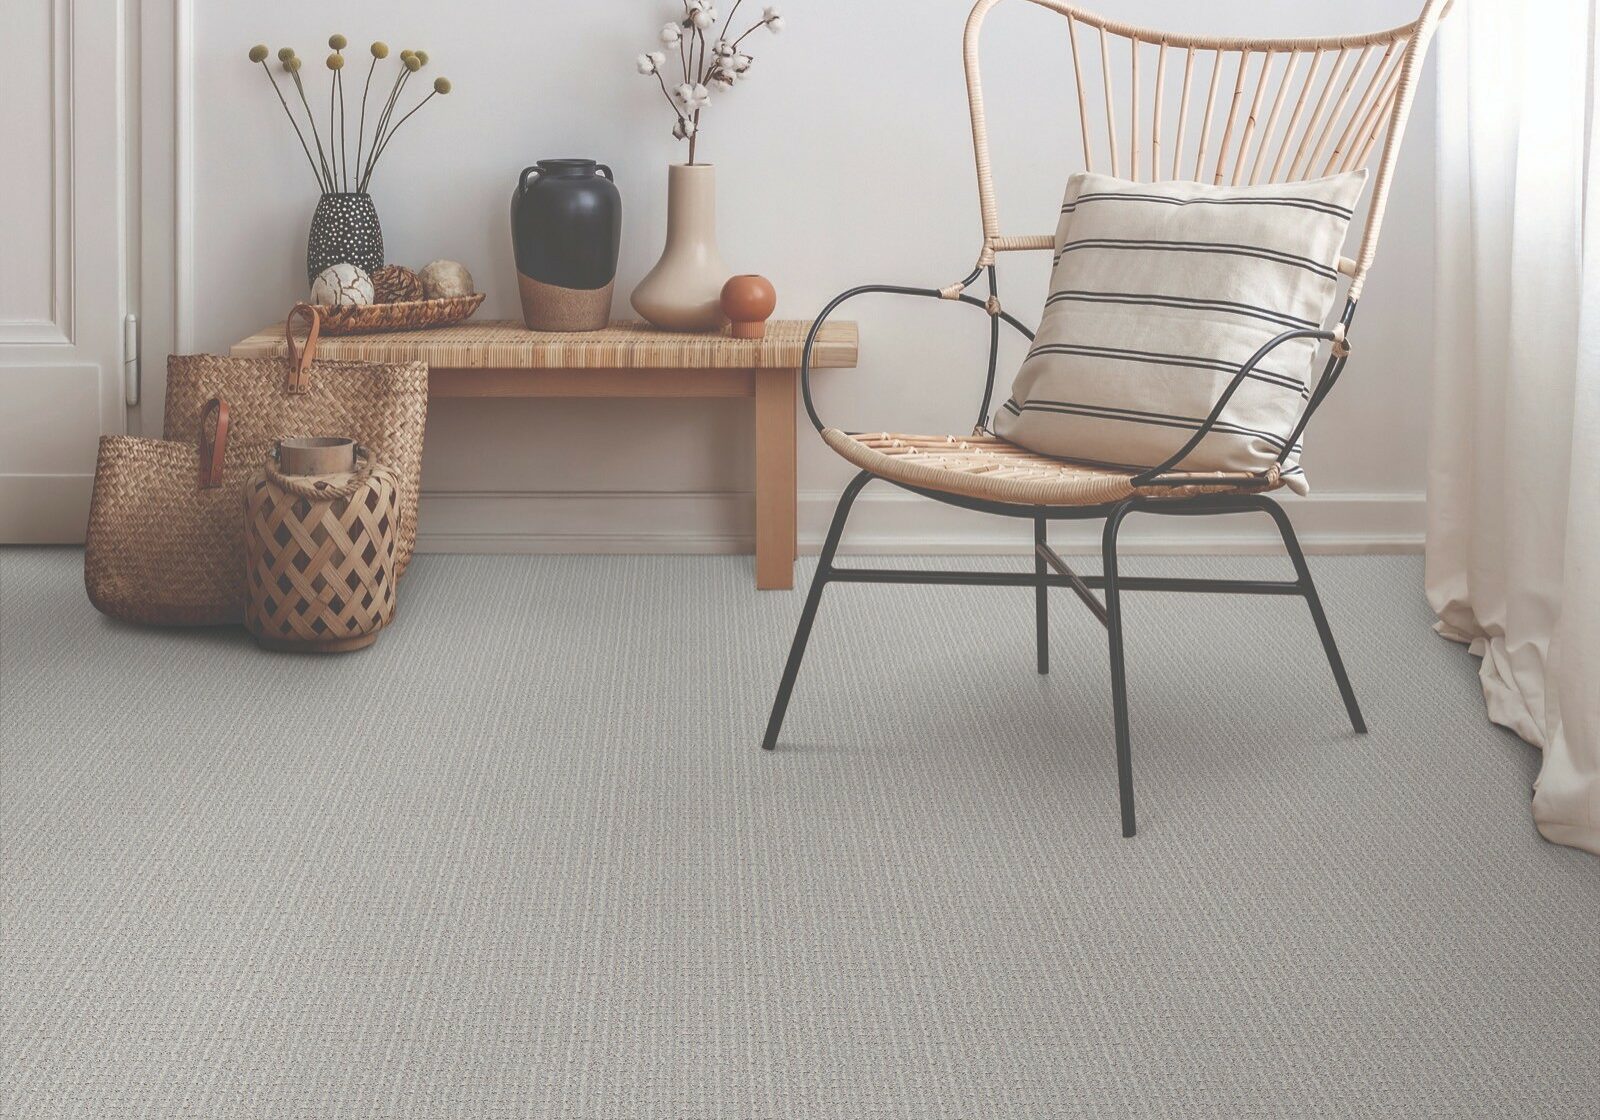 benefits of area rugs | Burton's Flooring Center